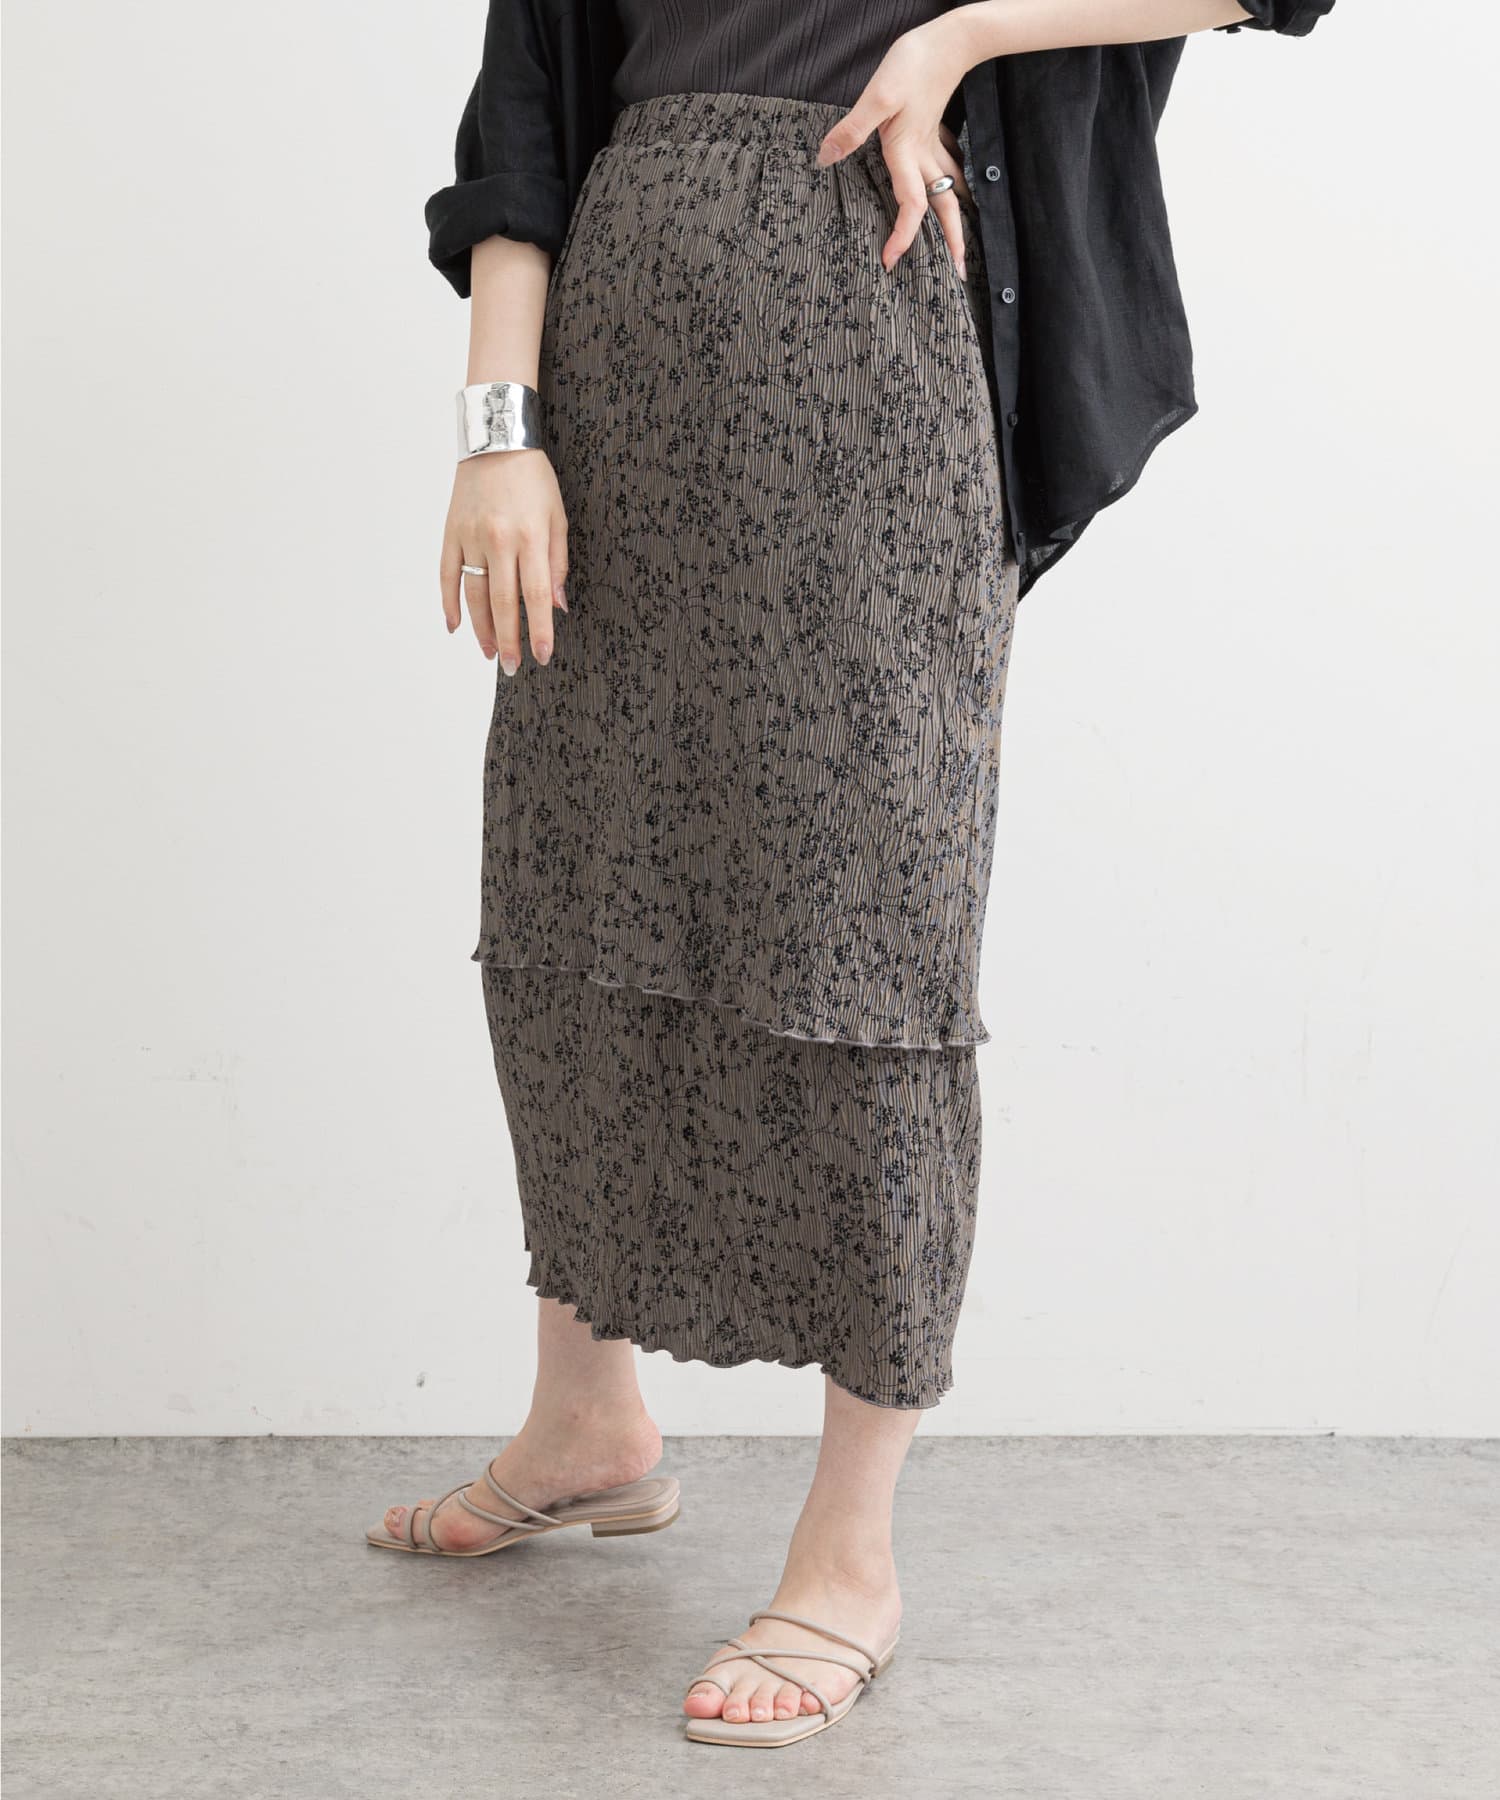 natural couture(ナチュラルクチュール) 【WEB限定】クリンクル加工ティアードナロースカート